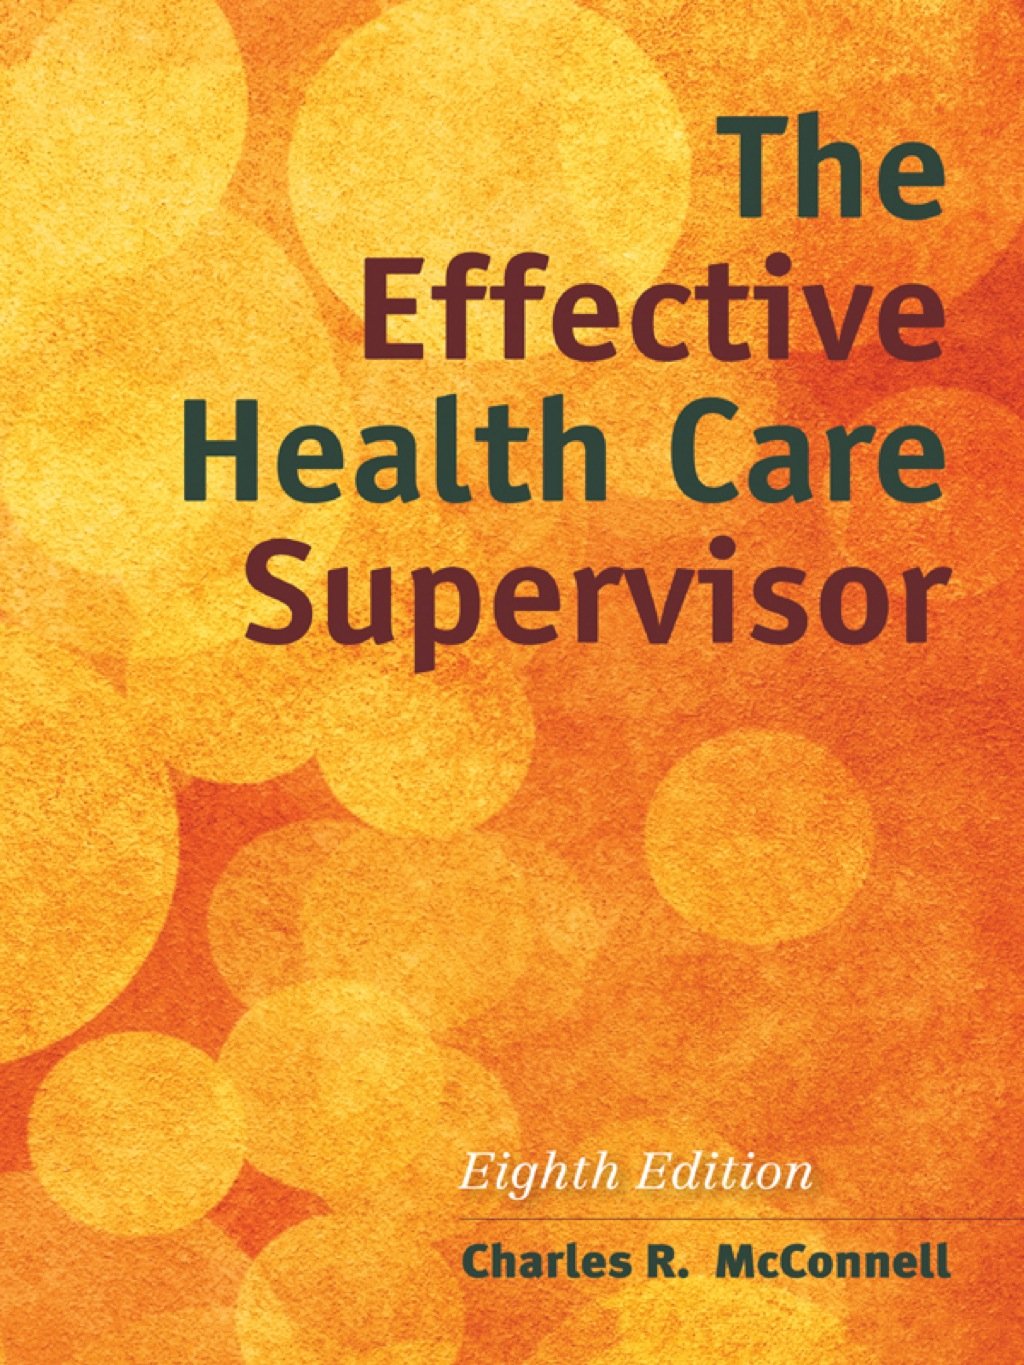 The Effective Health Care Supervisor, 8th Edition (PDF)